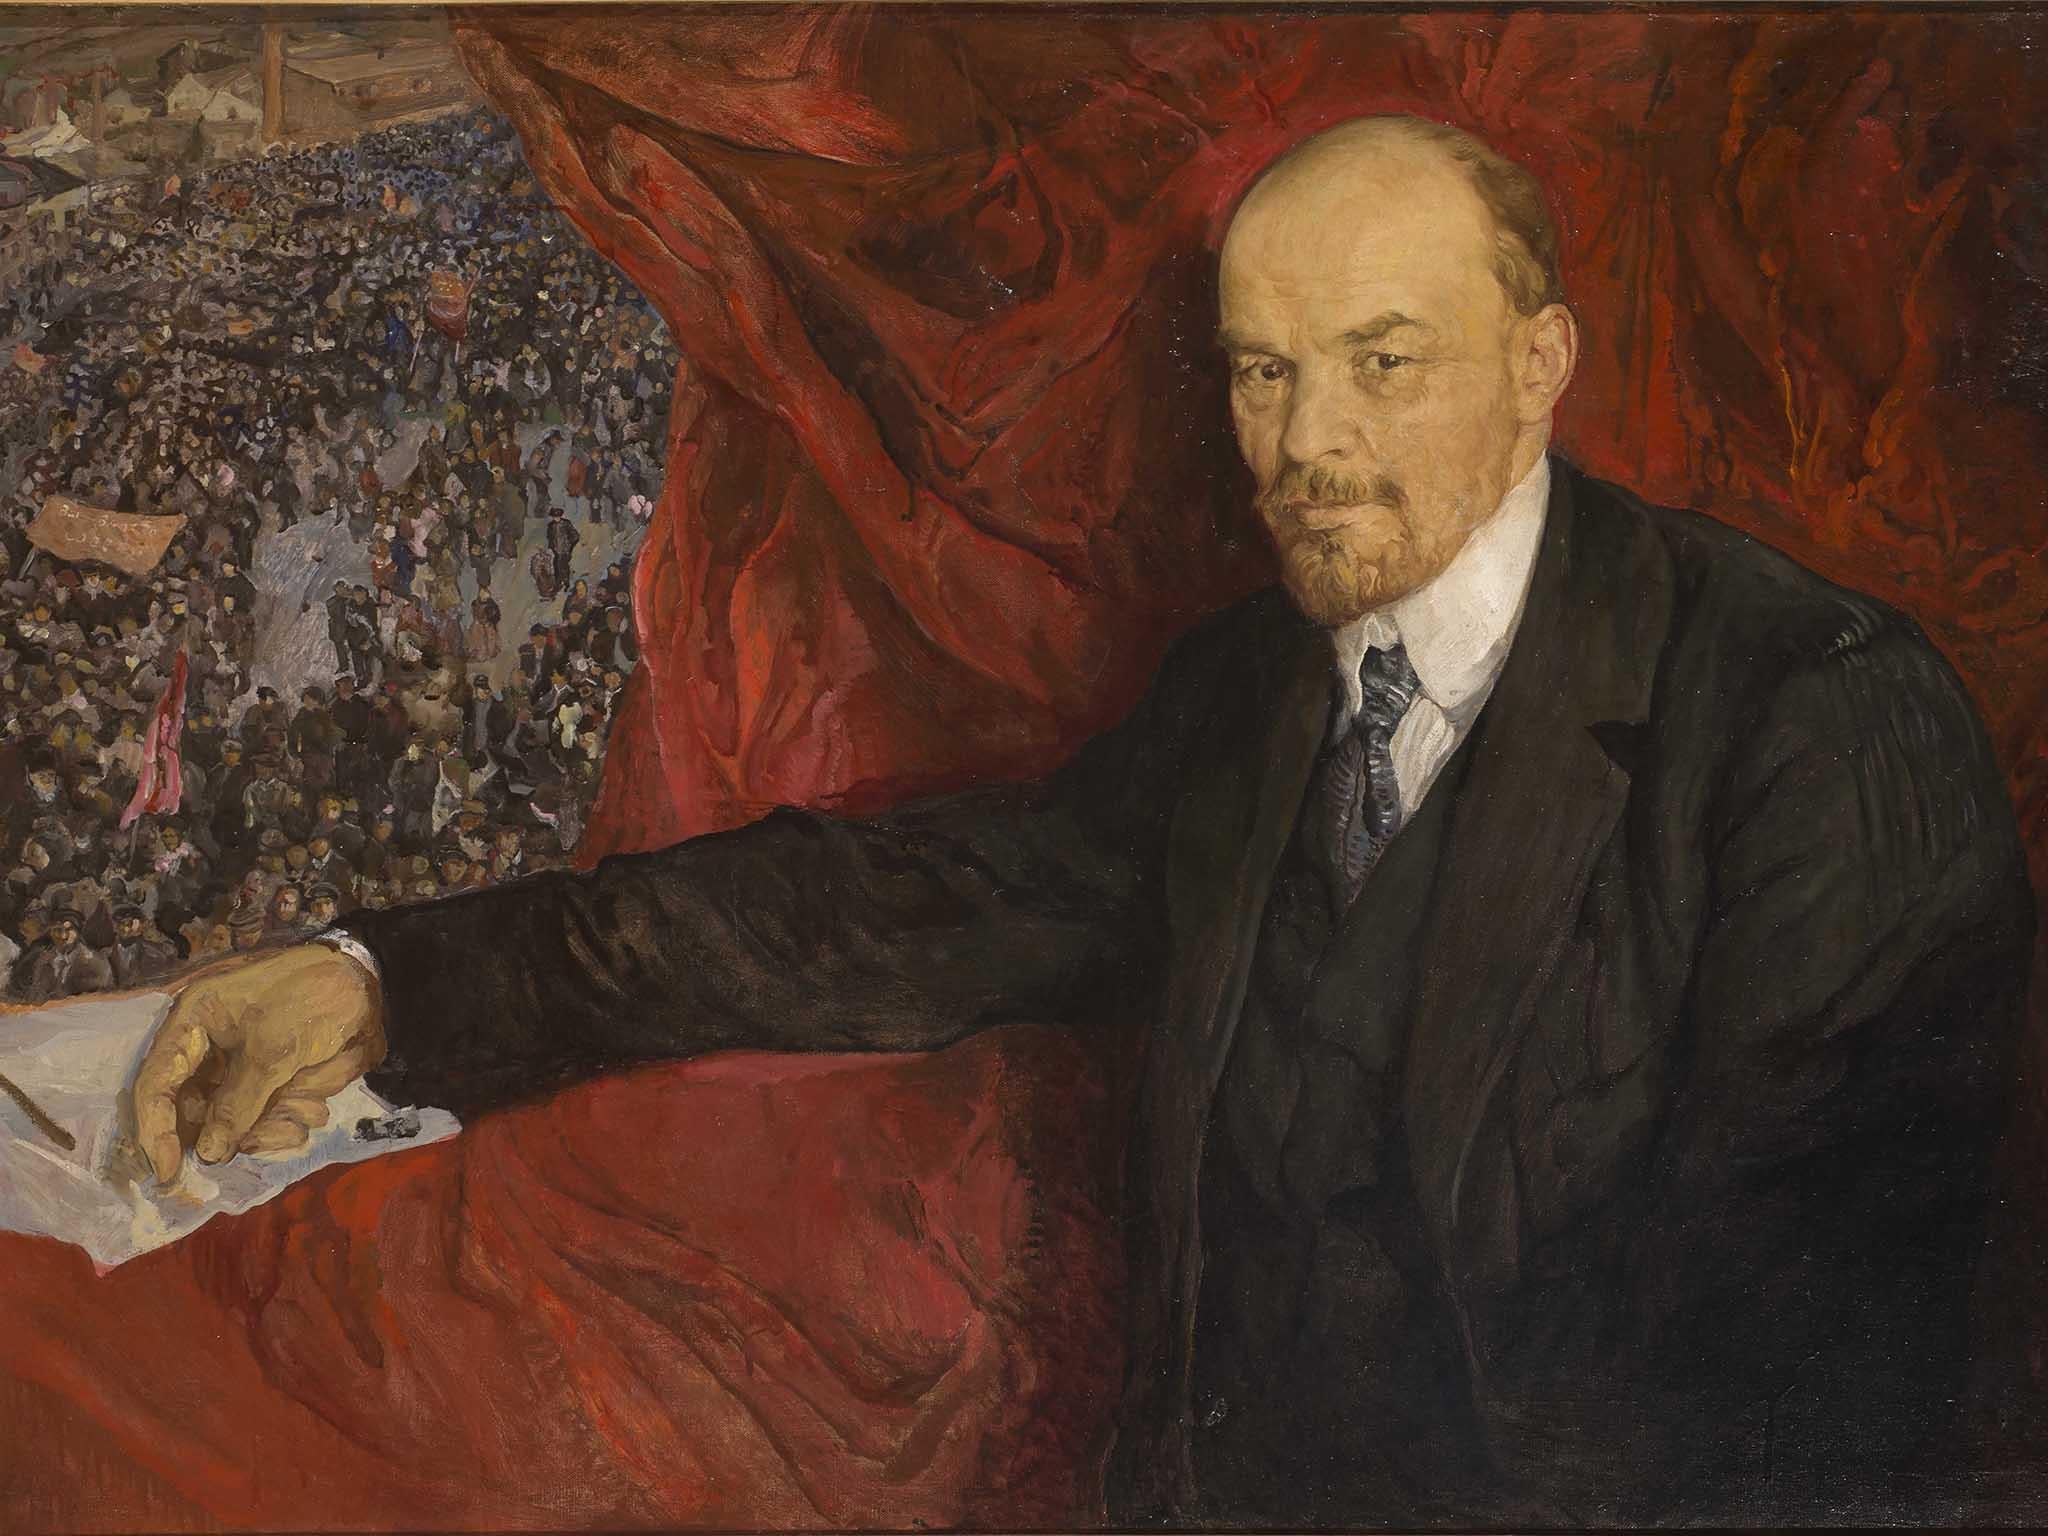 Isaak Brodsky, VI Lenin and Manifestation, 1919